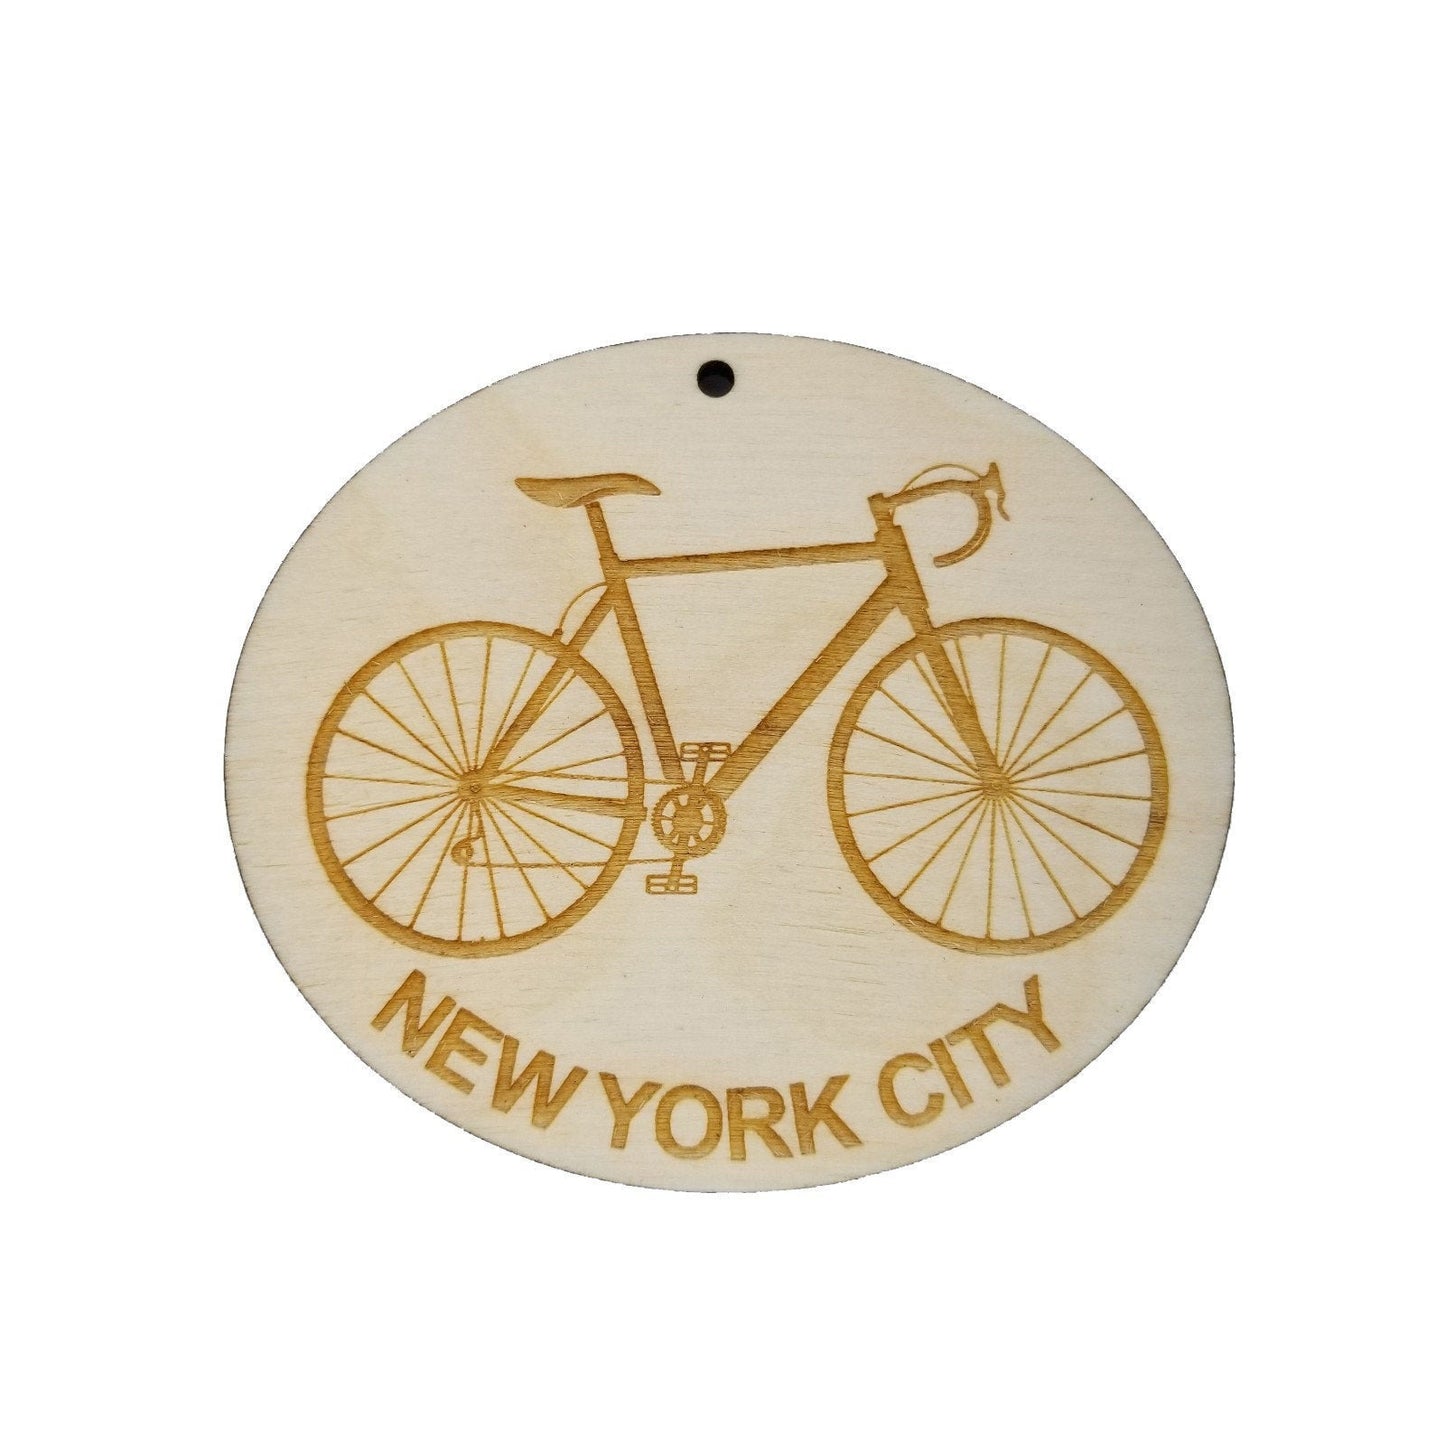 New York Wood Ornament - NYC Mens Bike or Bicycle - Handmade Wood Ornament Made in USA Christmas Decor CSU